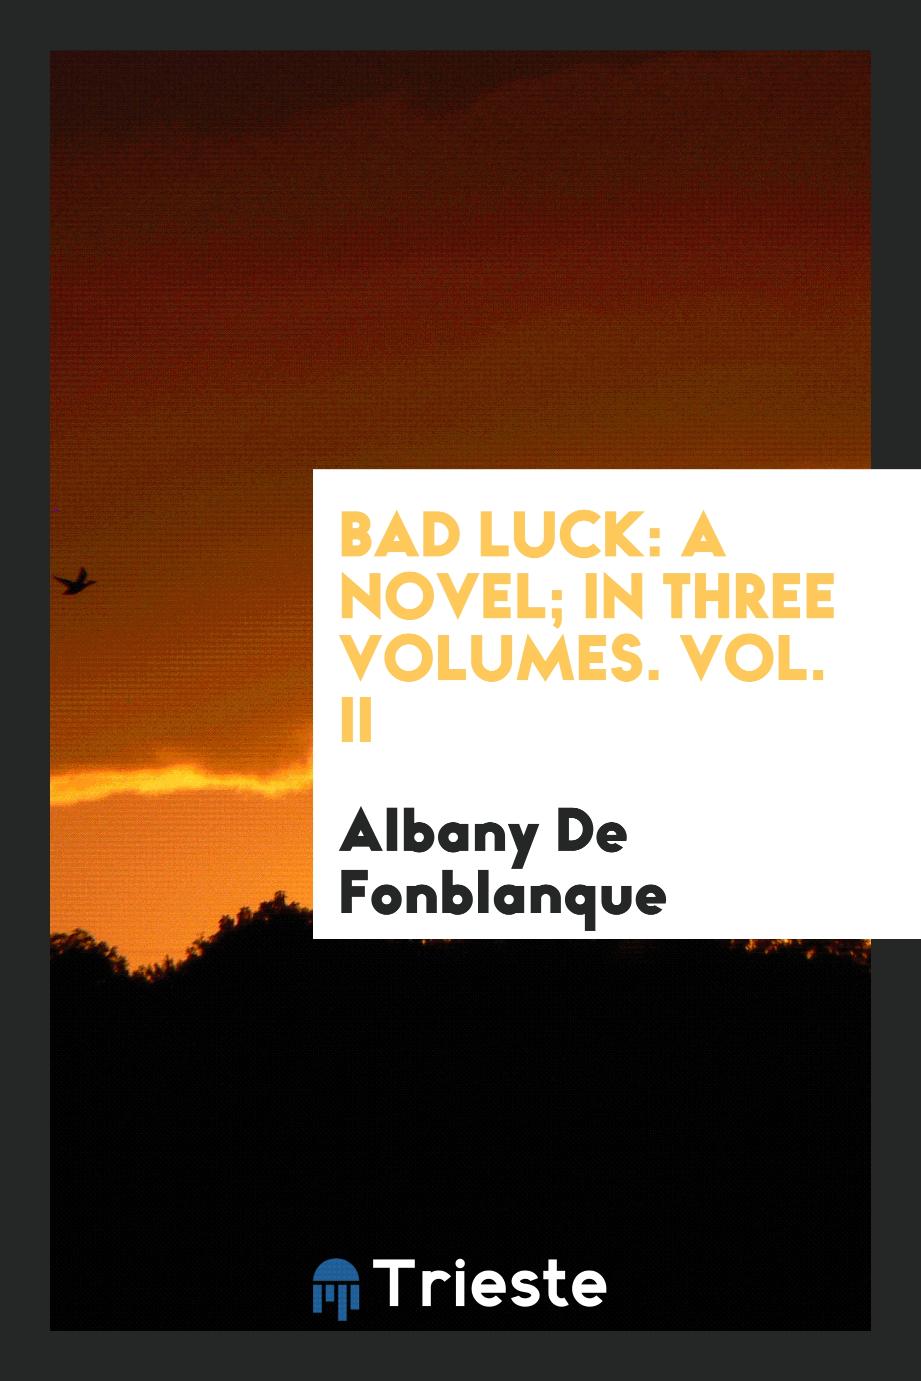 Bad luck: a novel; in three volumes. Vol. II